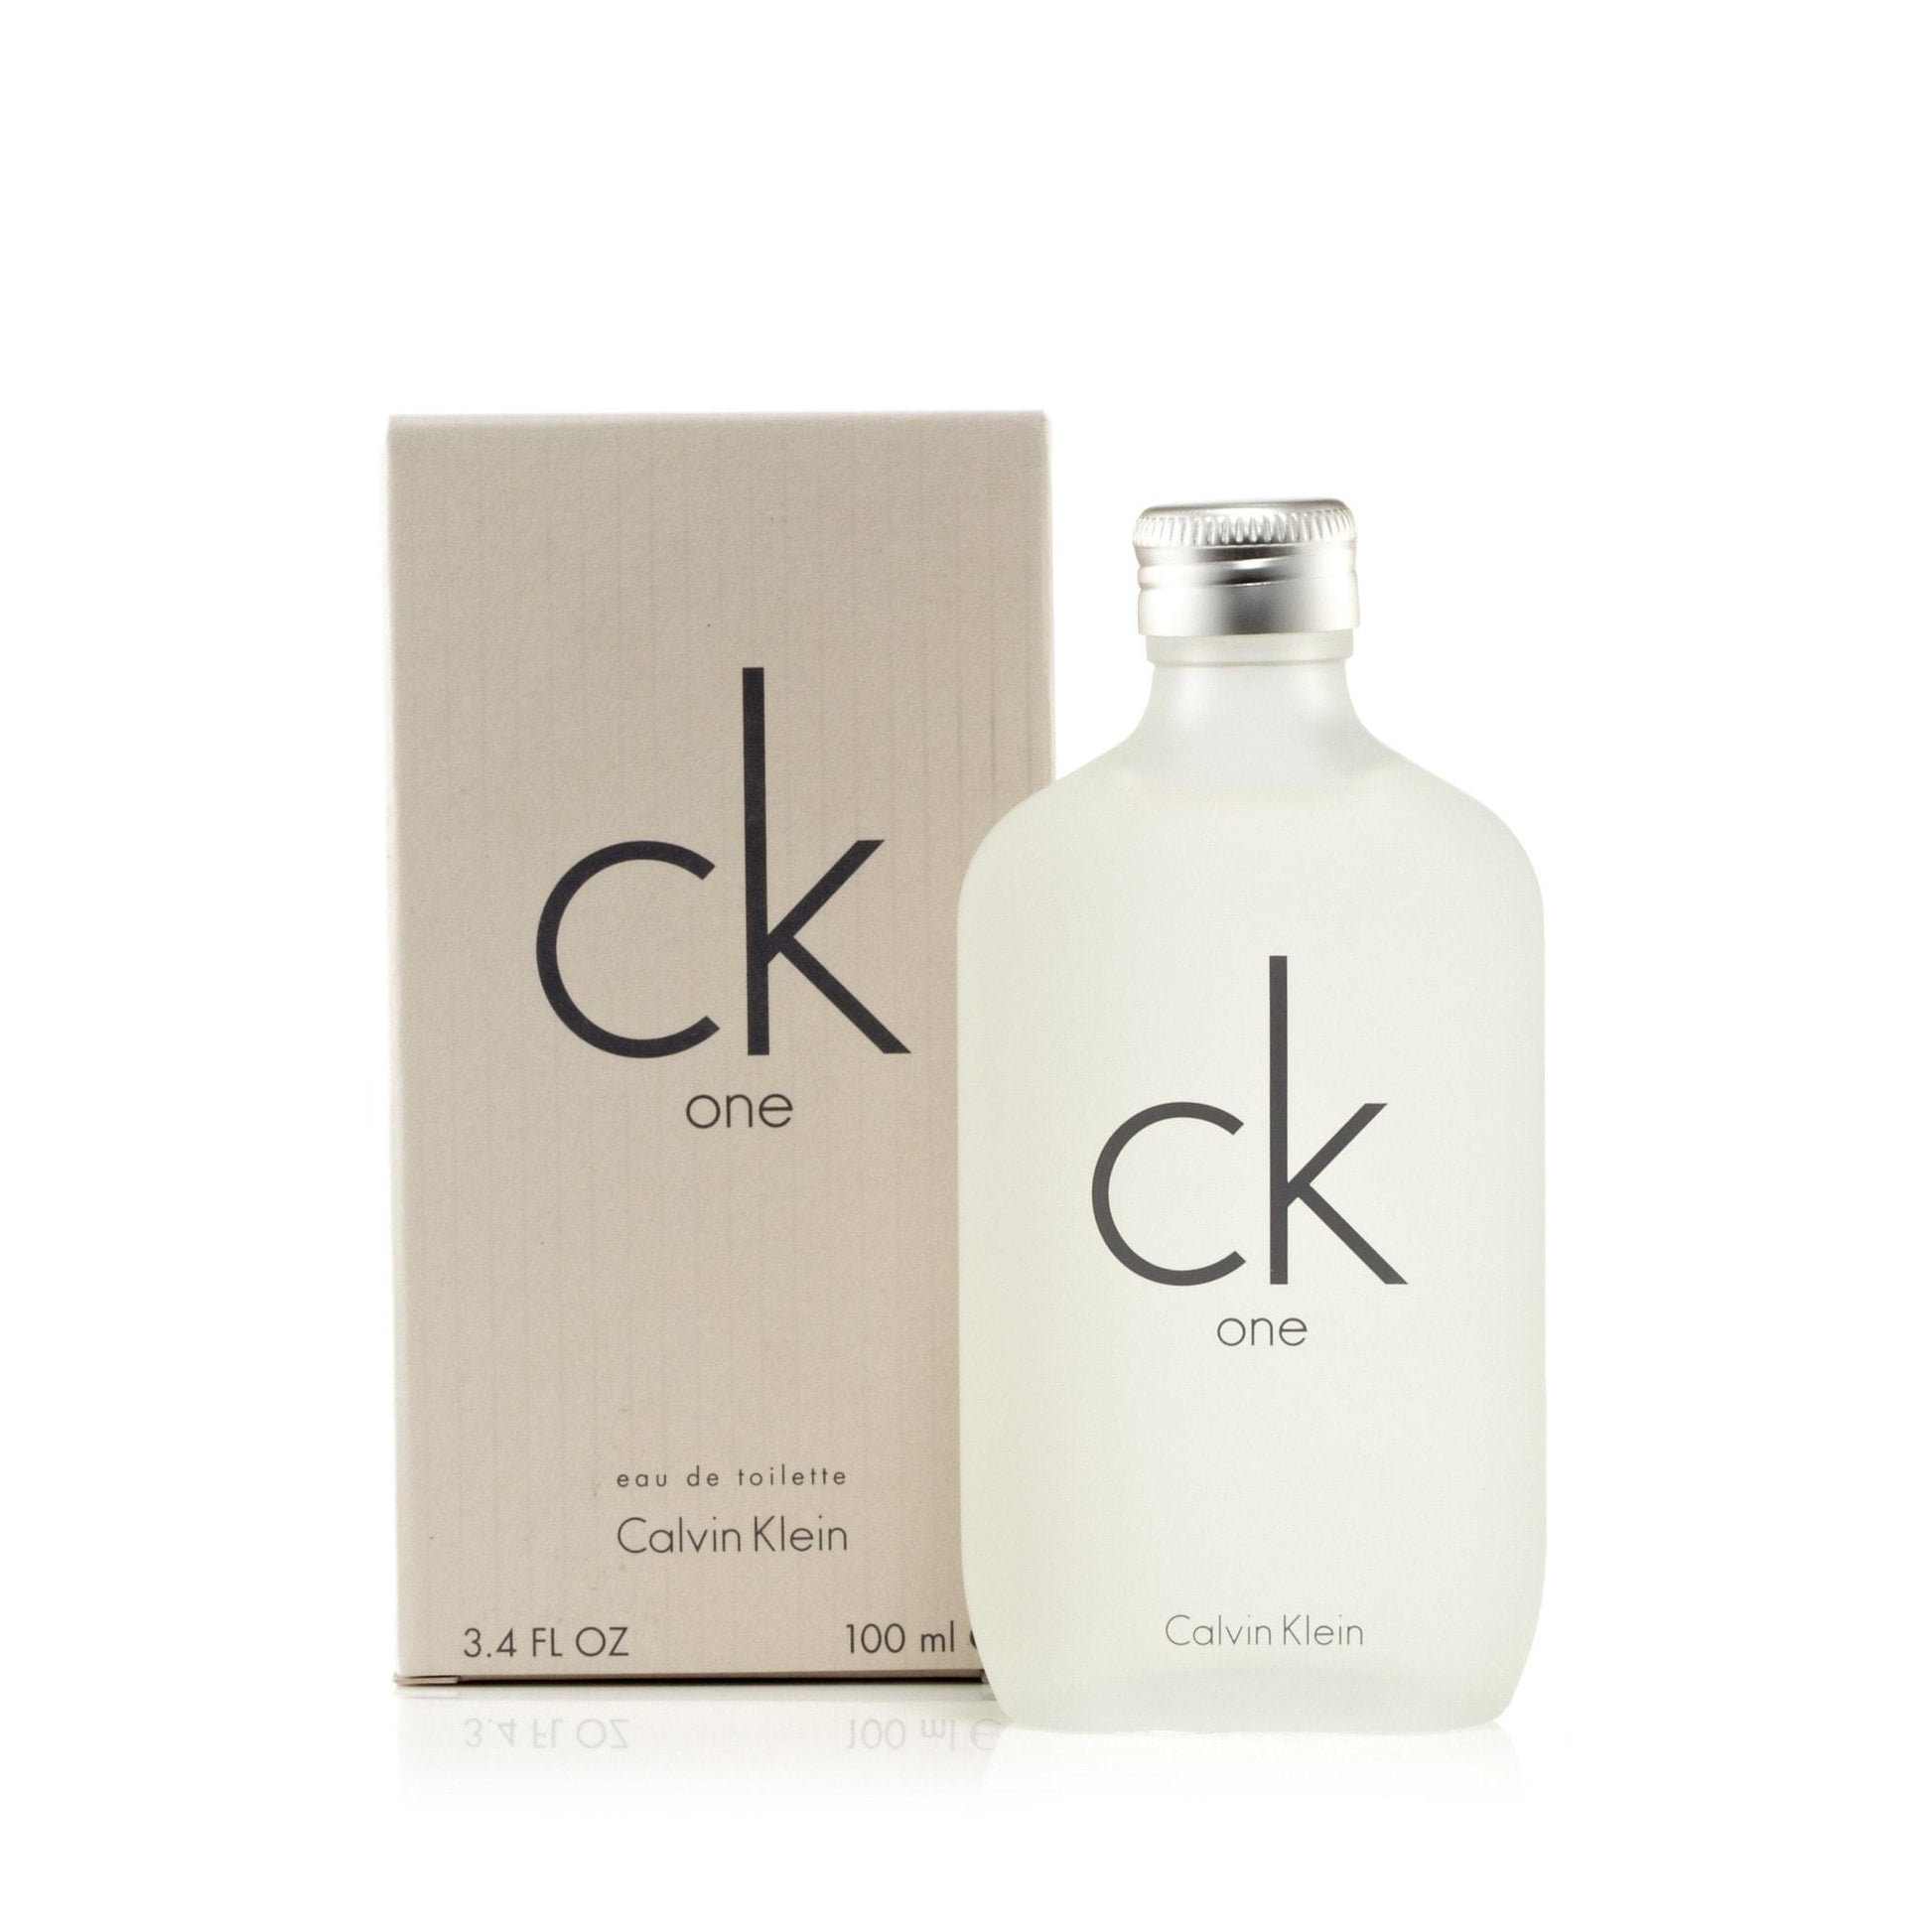 CK One Eau de Toilette Spray for Women and Men by Calvin Klein, Product image 6